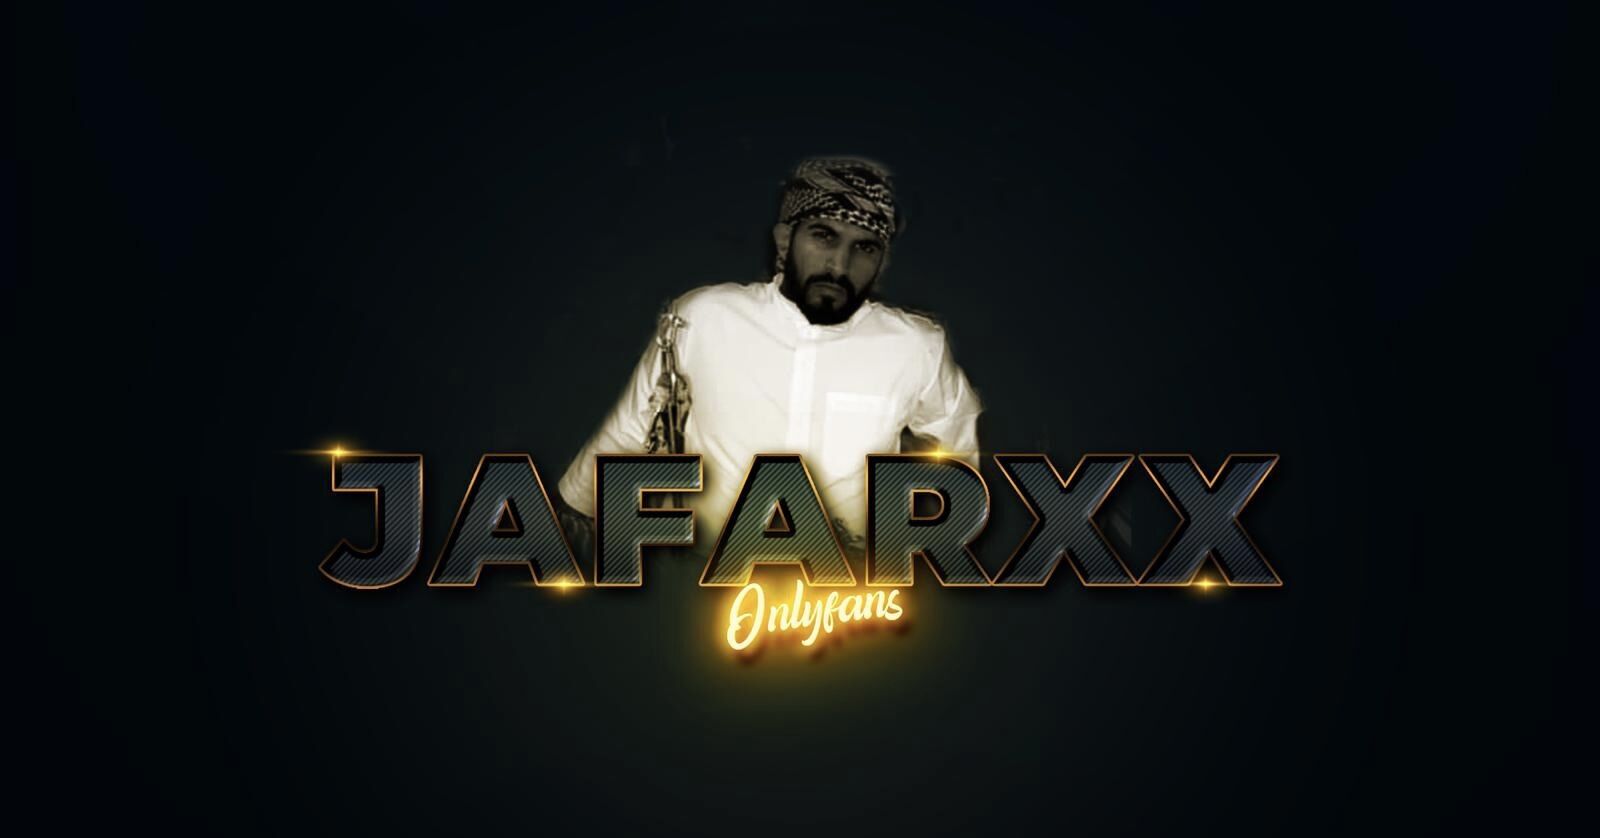 See Jafarxx profile